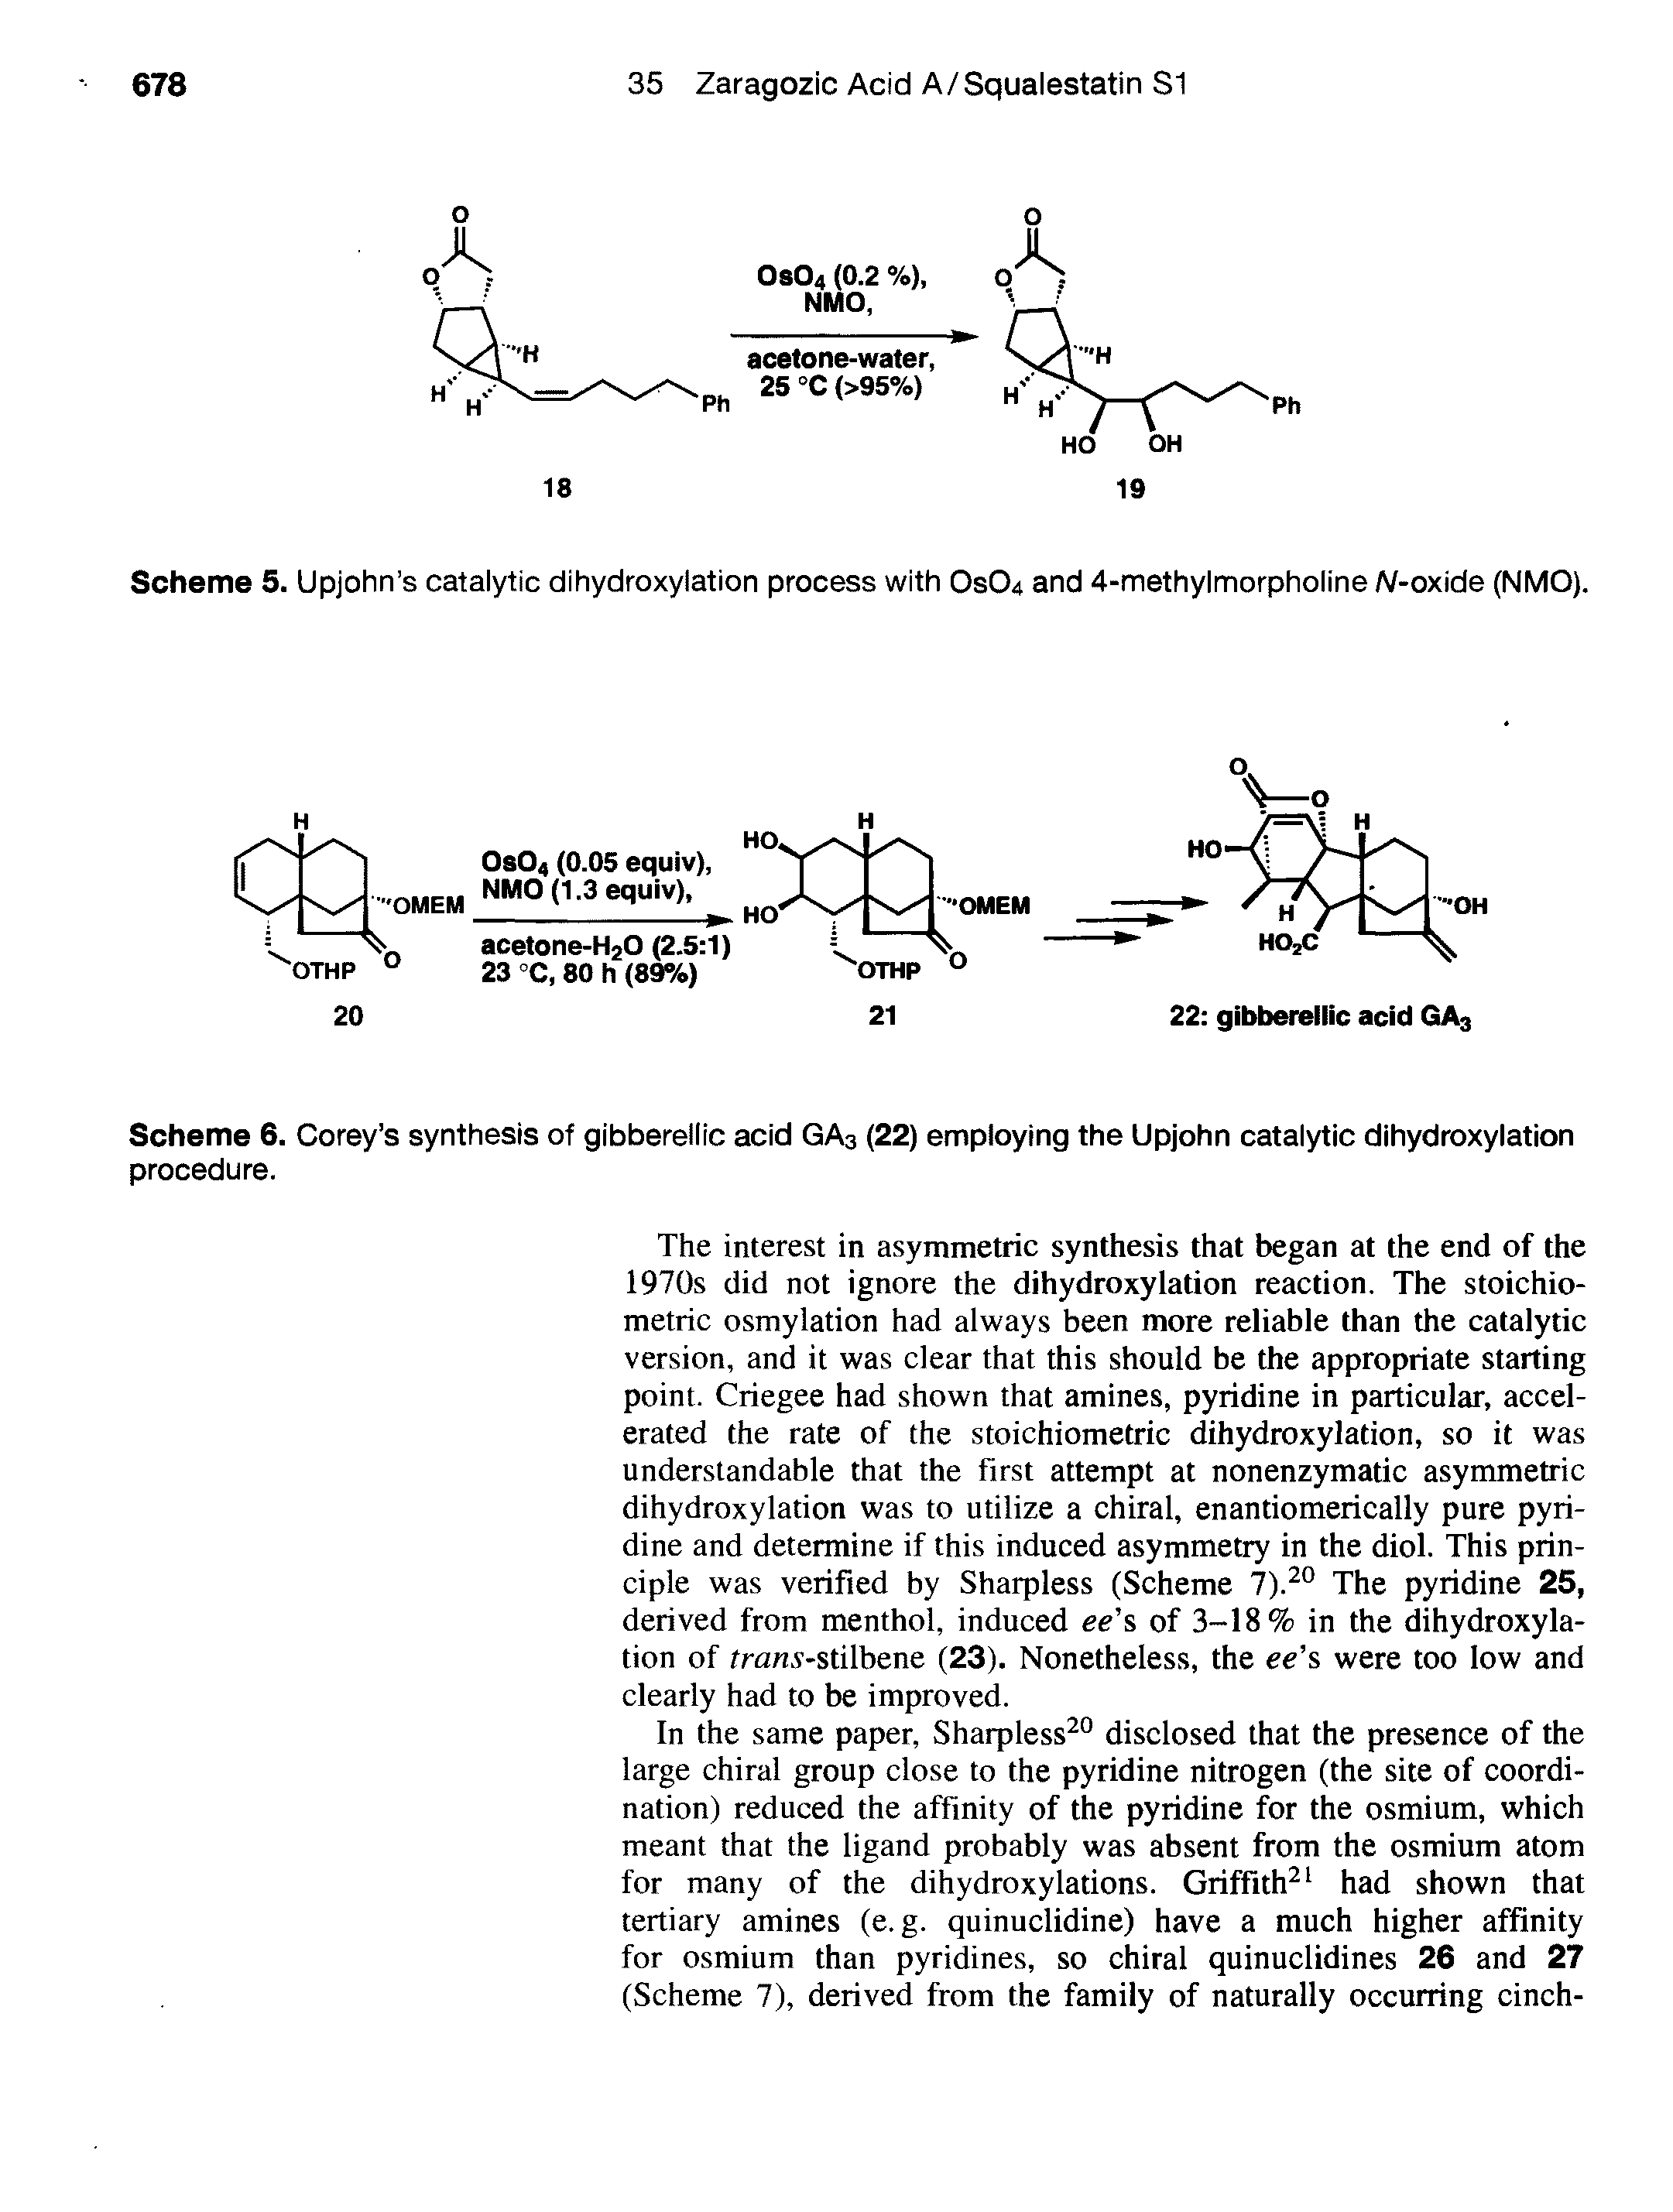 Scheme 6. Corey s synthesis of gibberellic acid GA3 (22) employing the Upjohn catalytic dihydroxylation procedure.